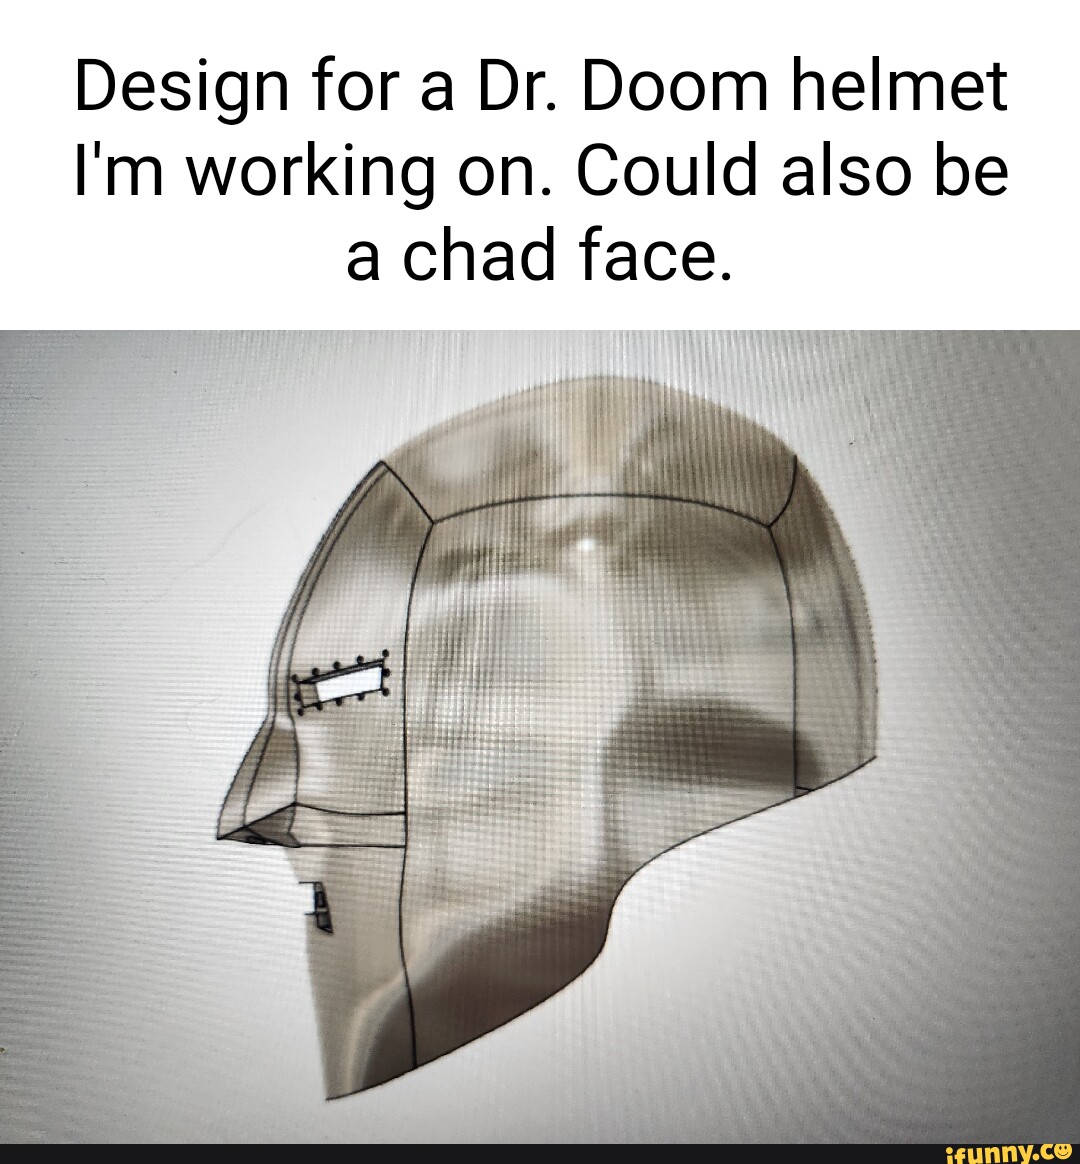 Chad face : r/ShitPostCrusaders